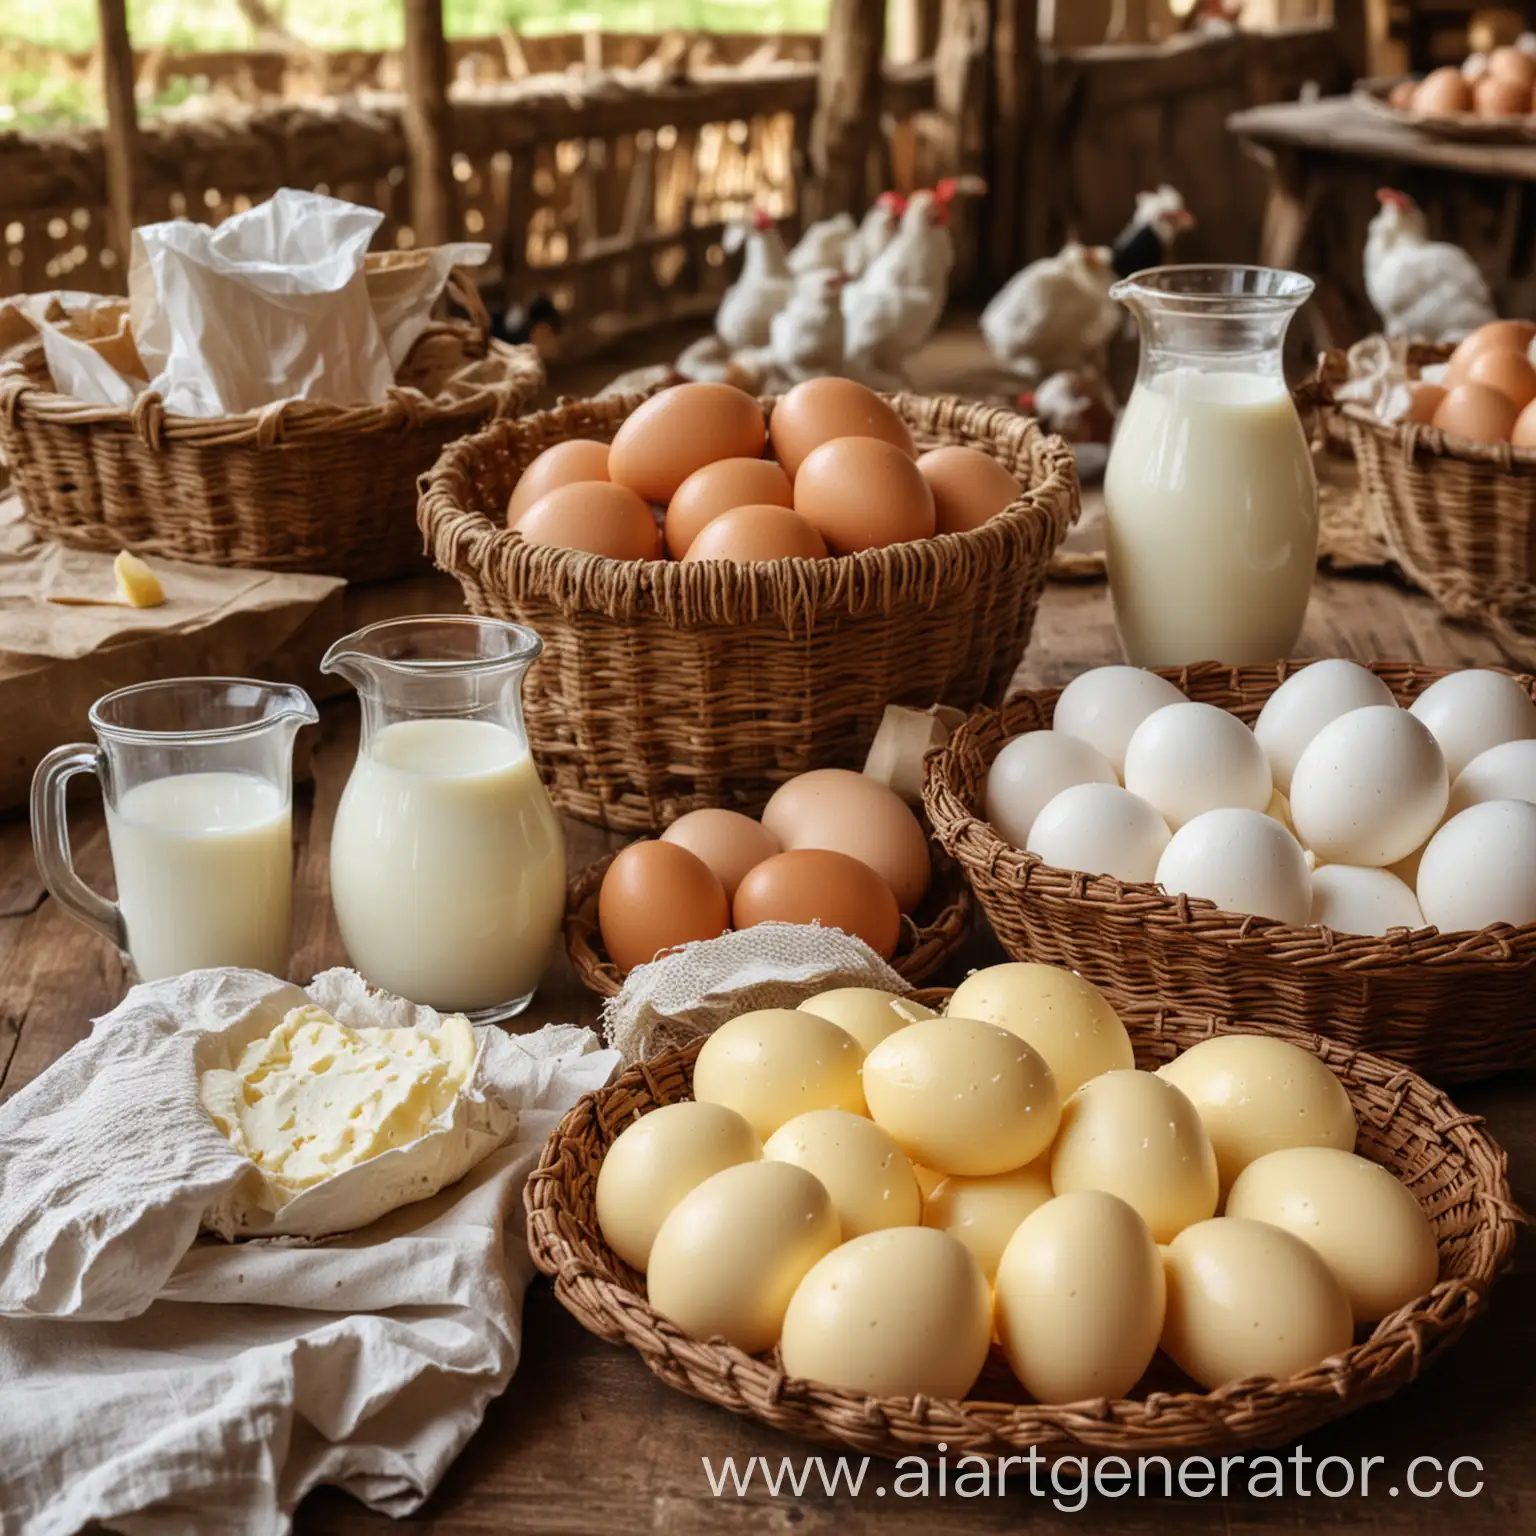 Farmhouse-Breakfast-Spread-with-Fresh-Cheese-Milk-and-Eggs